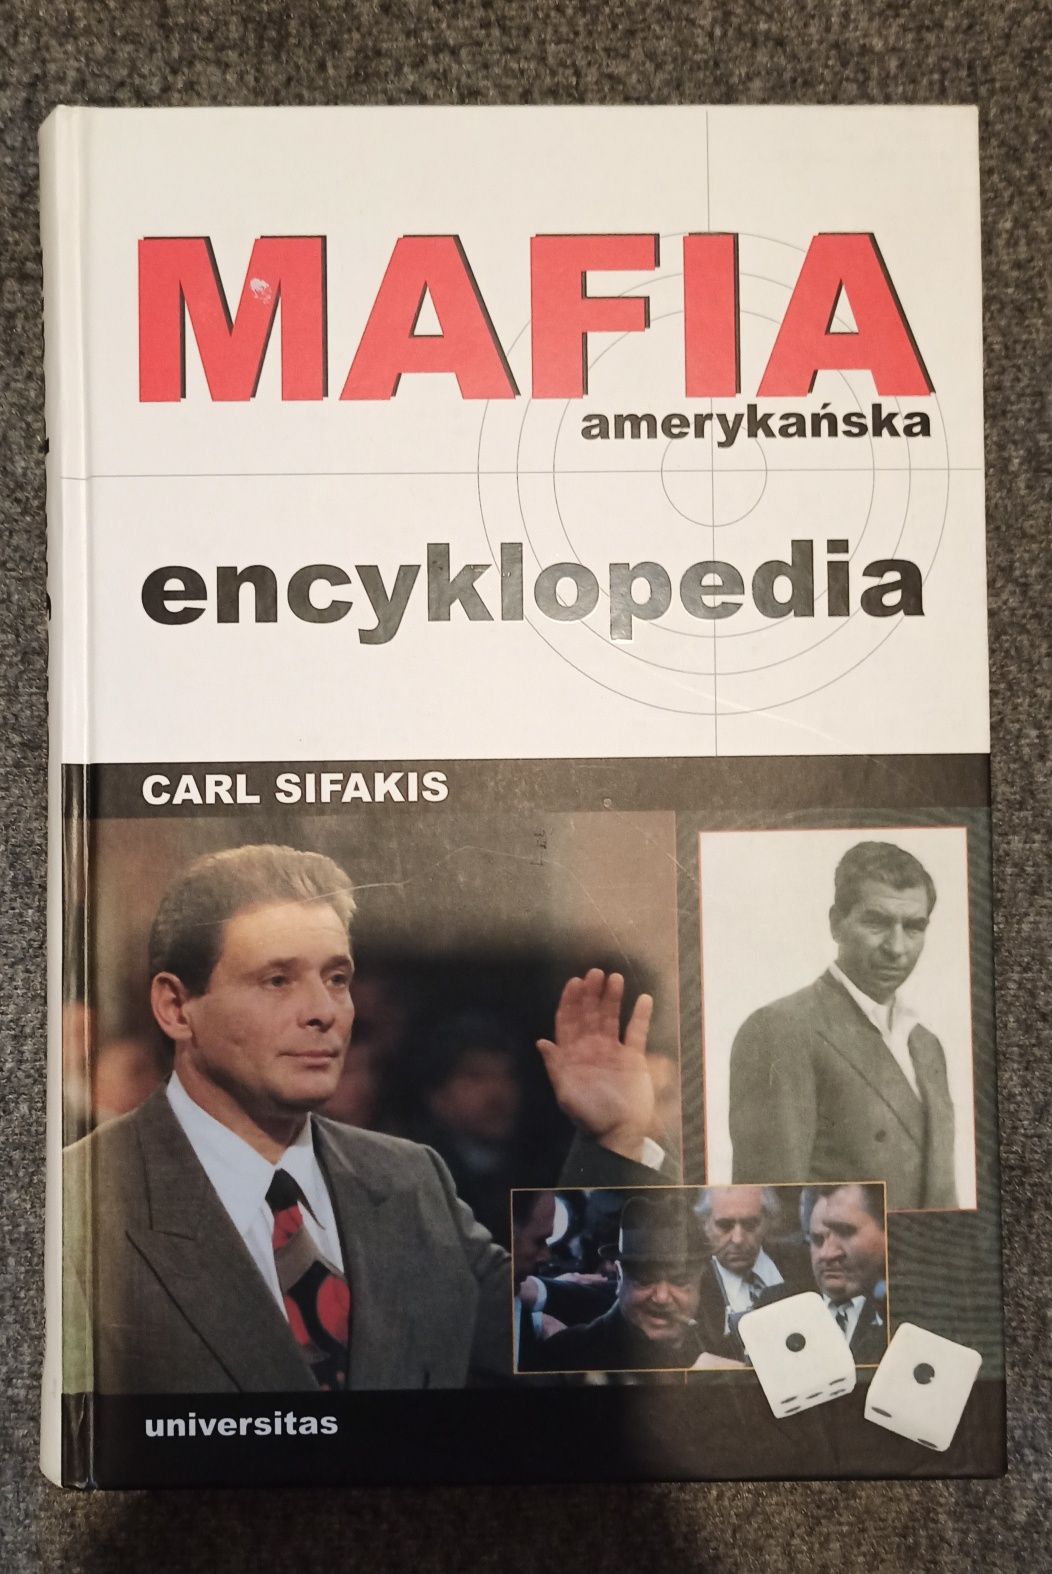 Mafia Amerykanska - encyklopedia. Carl Sifakis